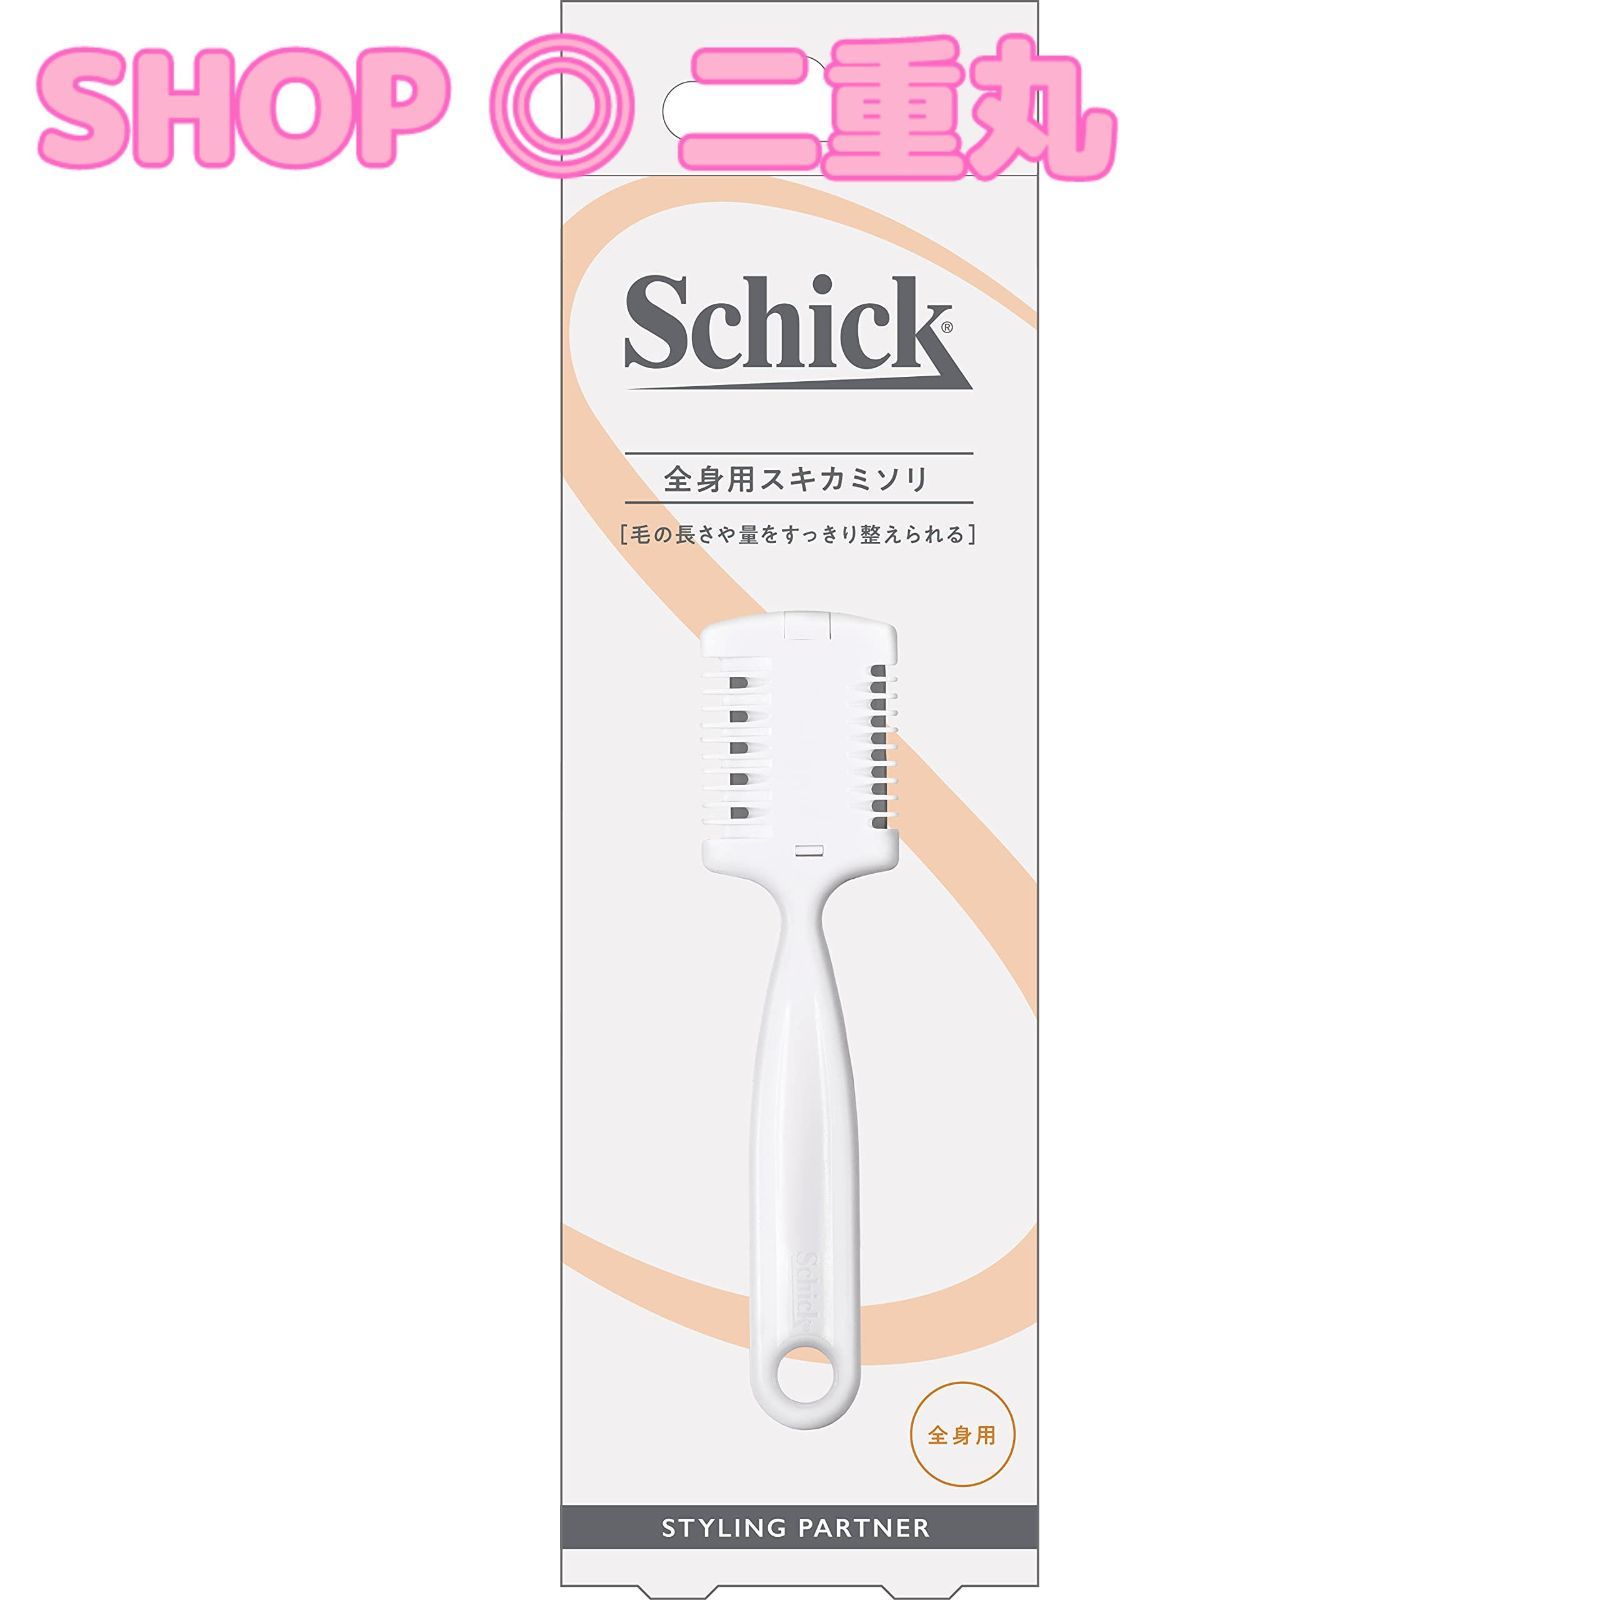 Schick(シック) 全身用 スキカミソリ メンズ ヘアトリマー ホワイト (1